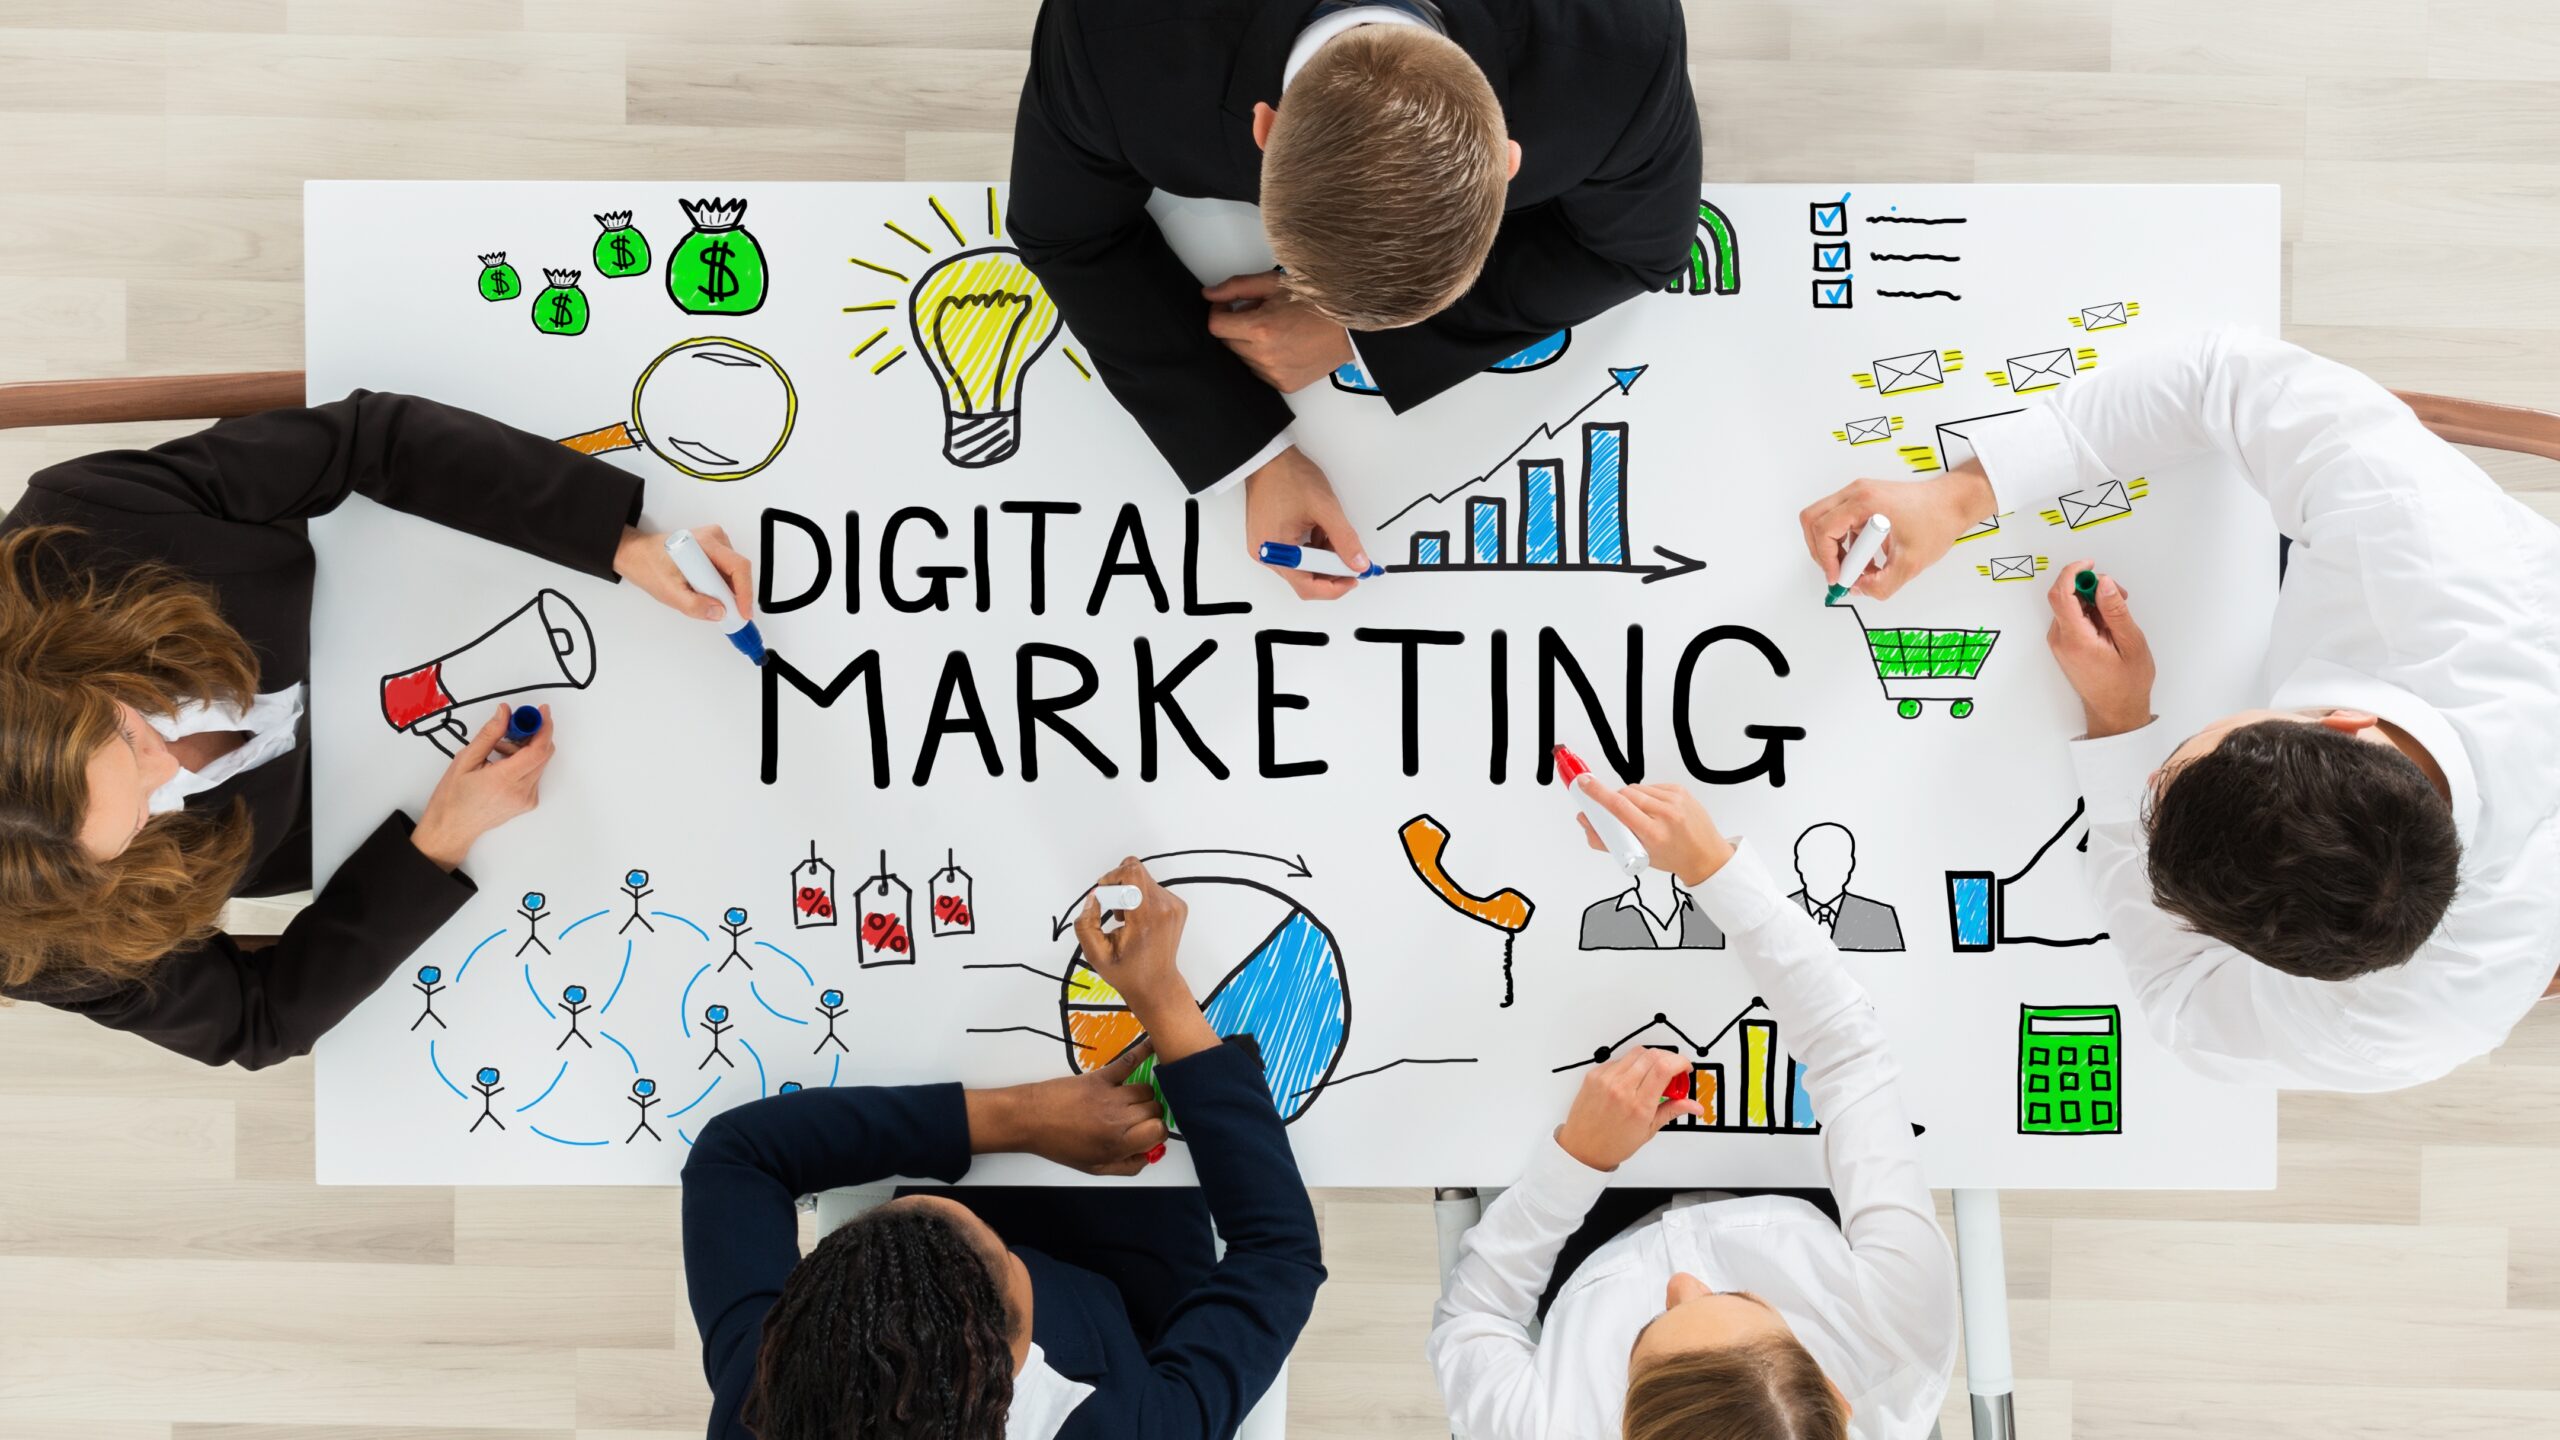 Digital Marketing and Performance Marketing with IBU Digital